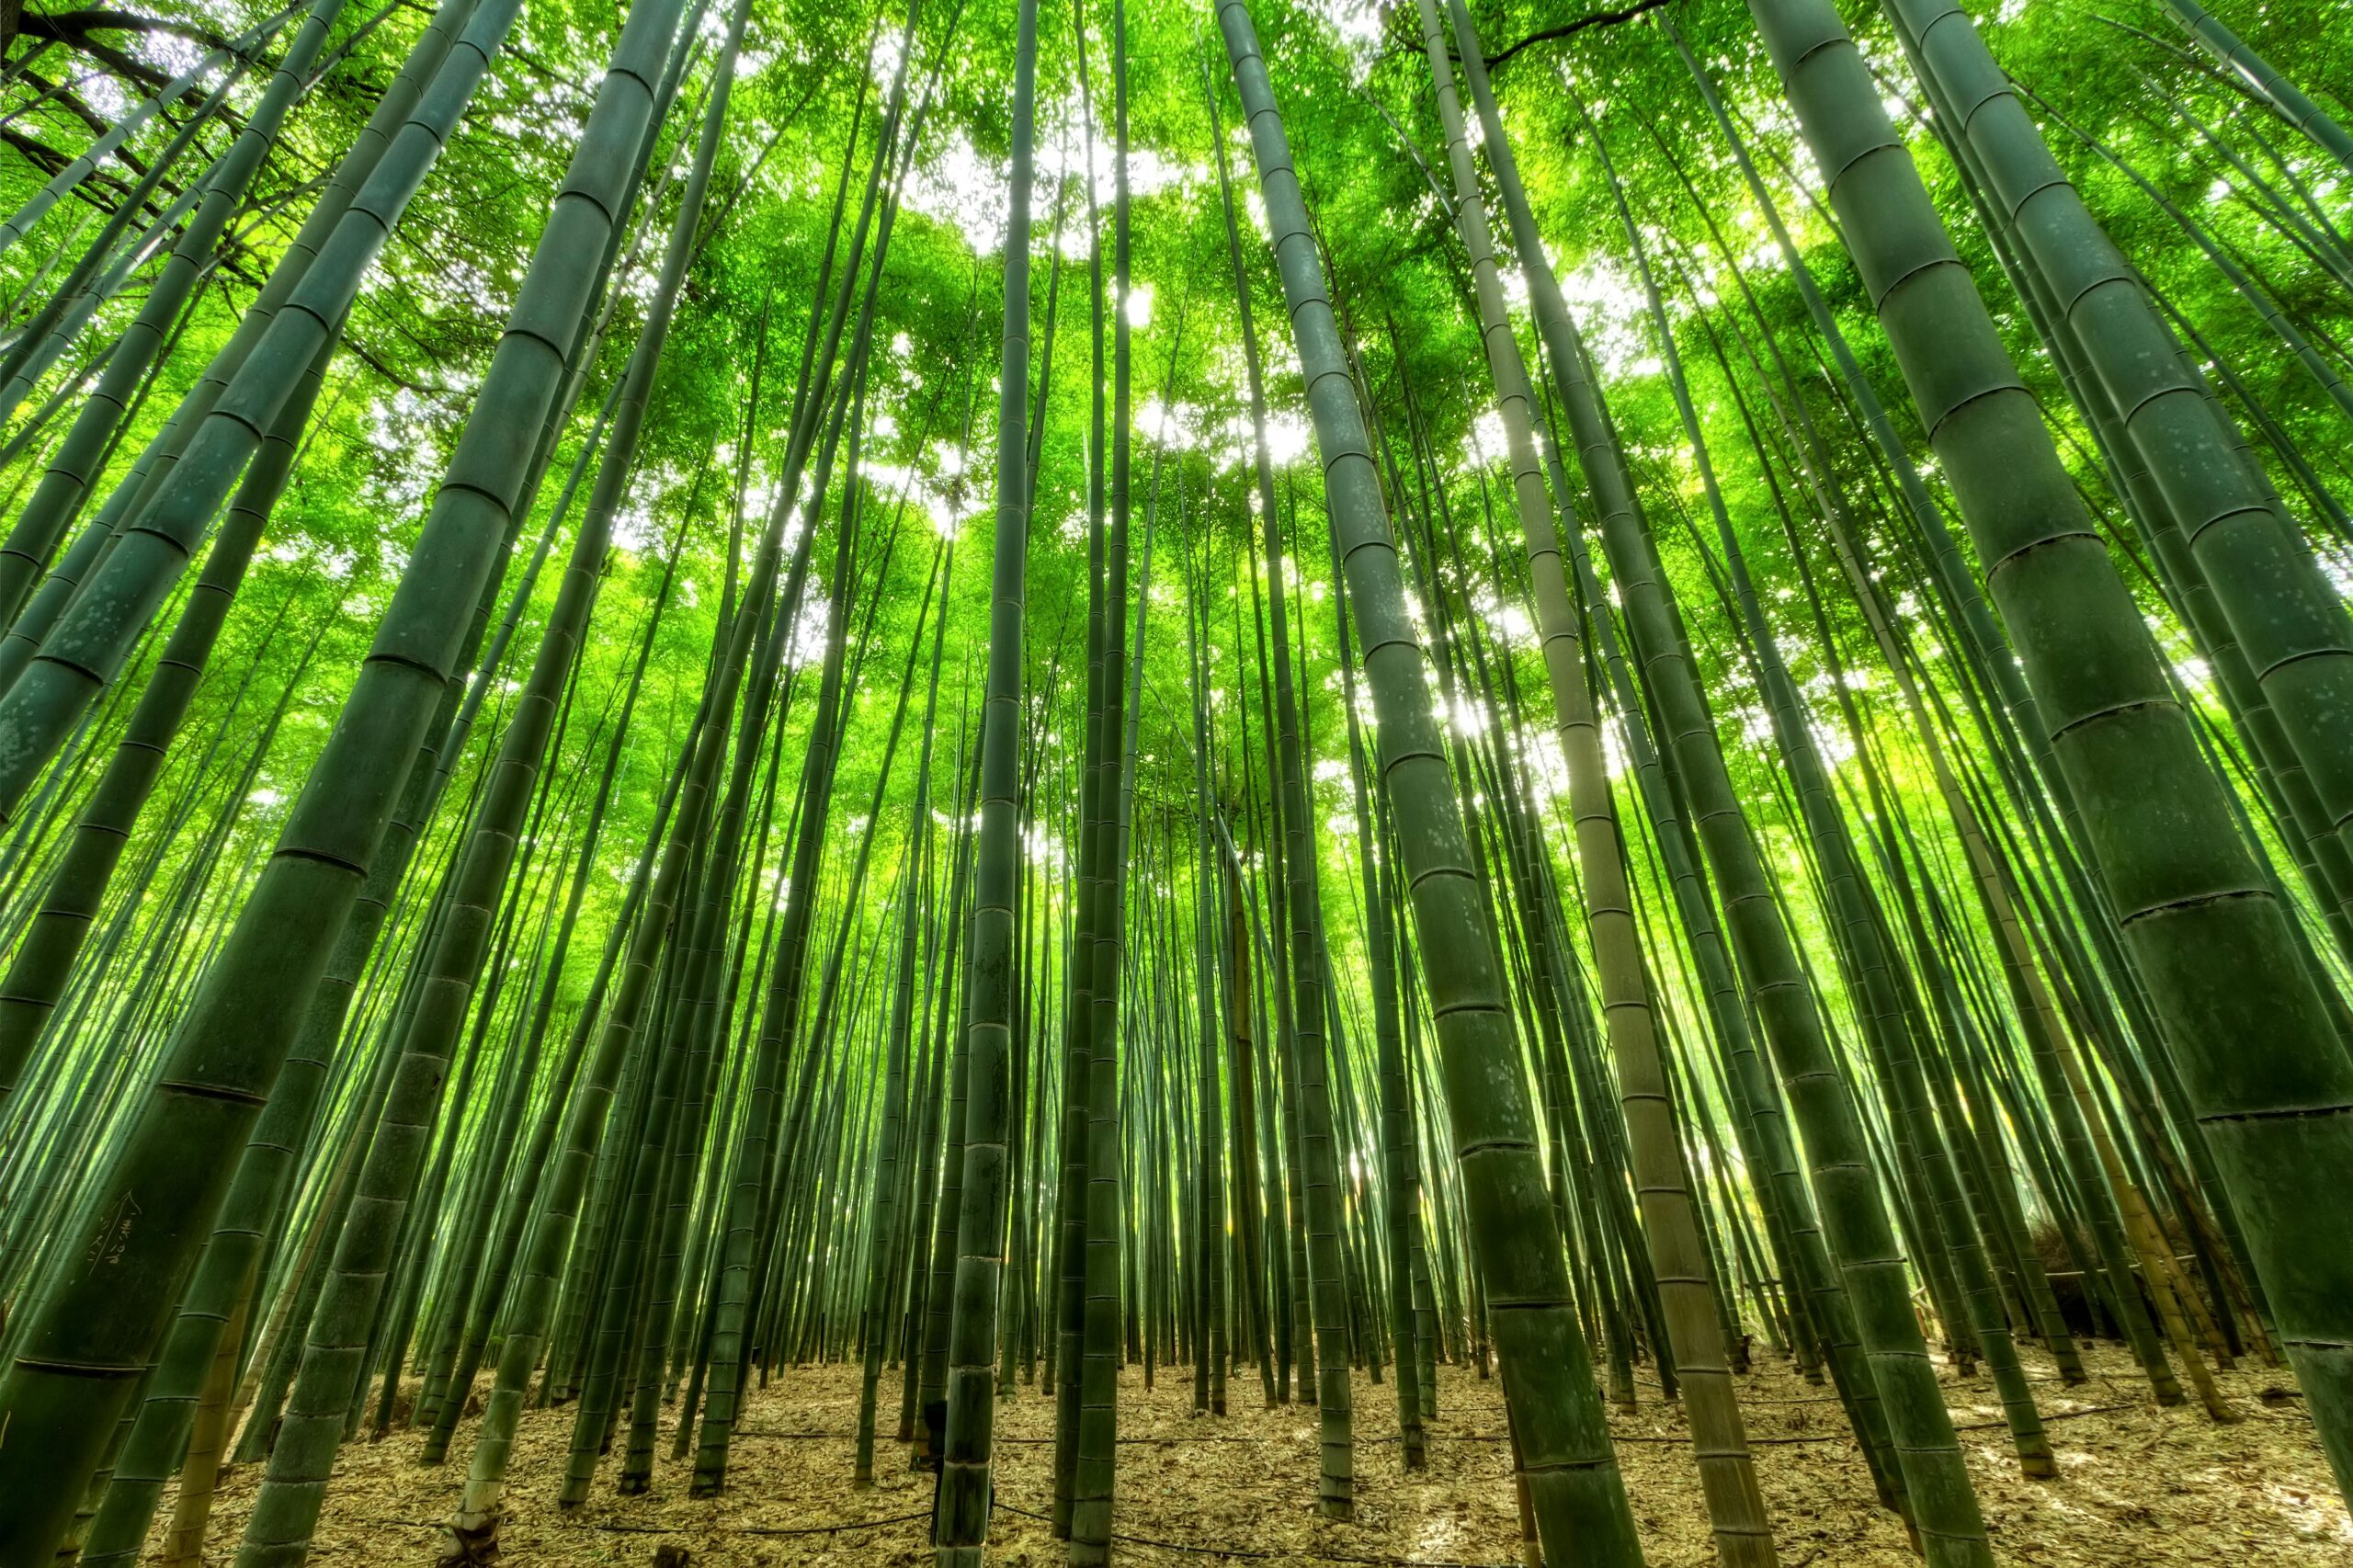 Floresta de bambu